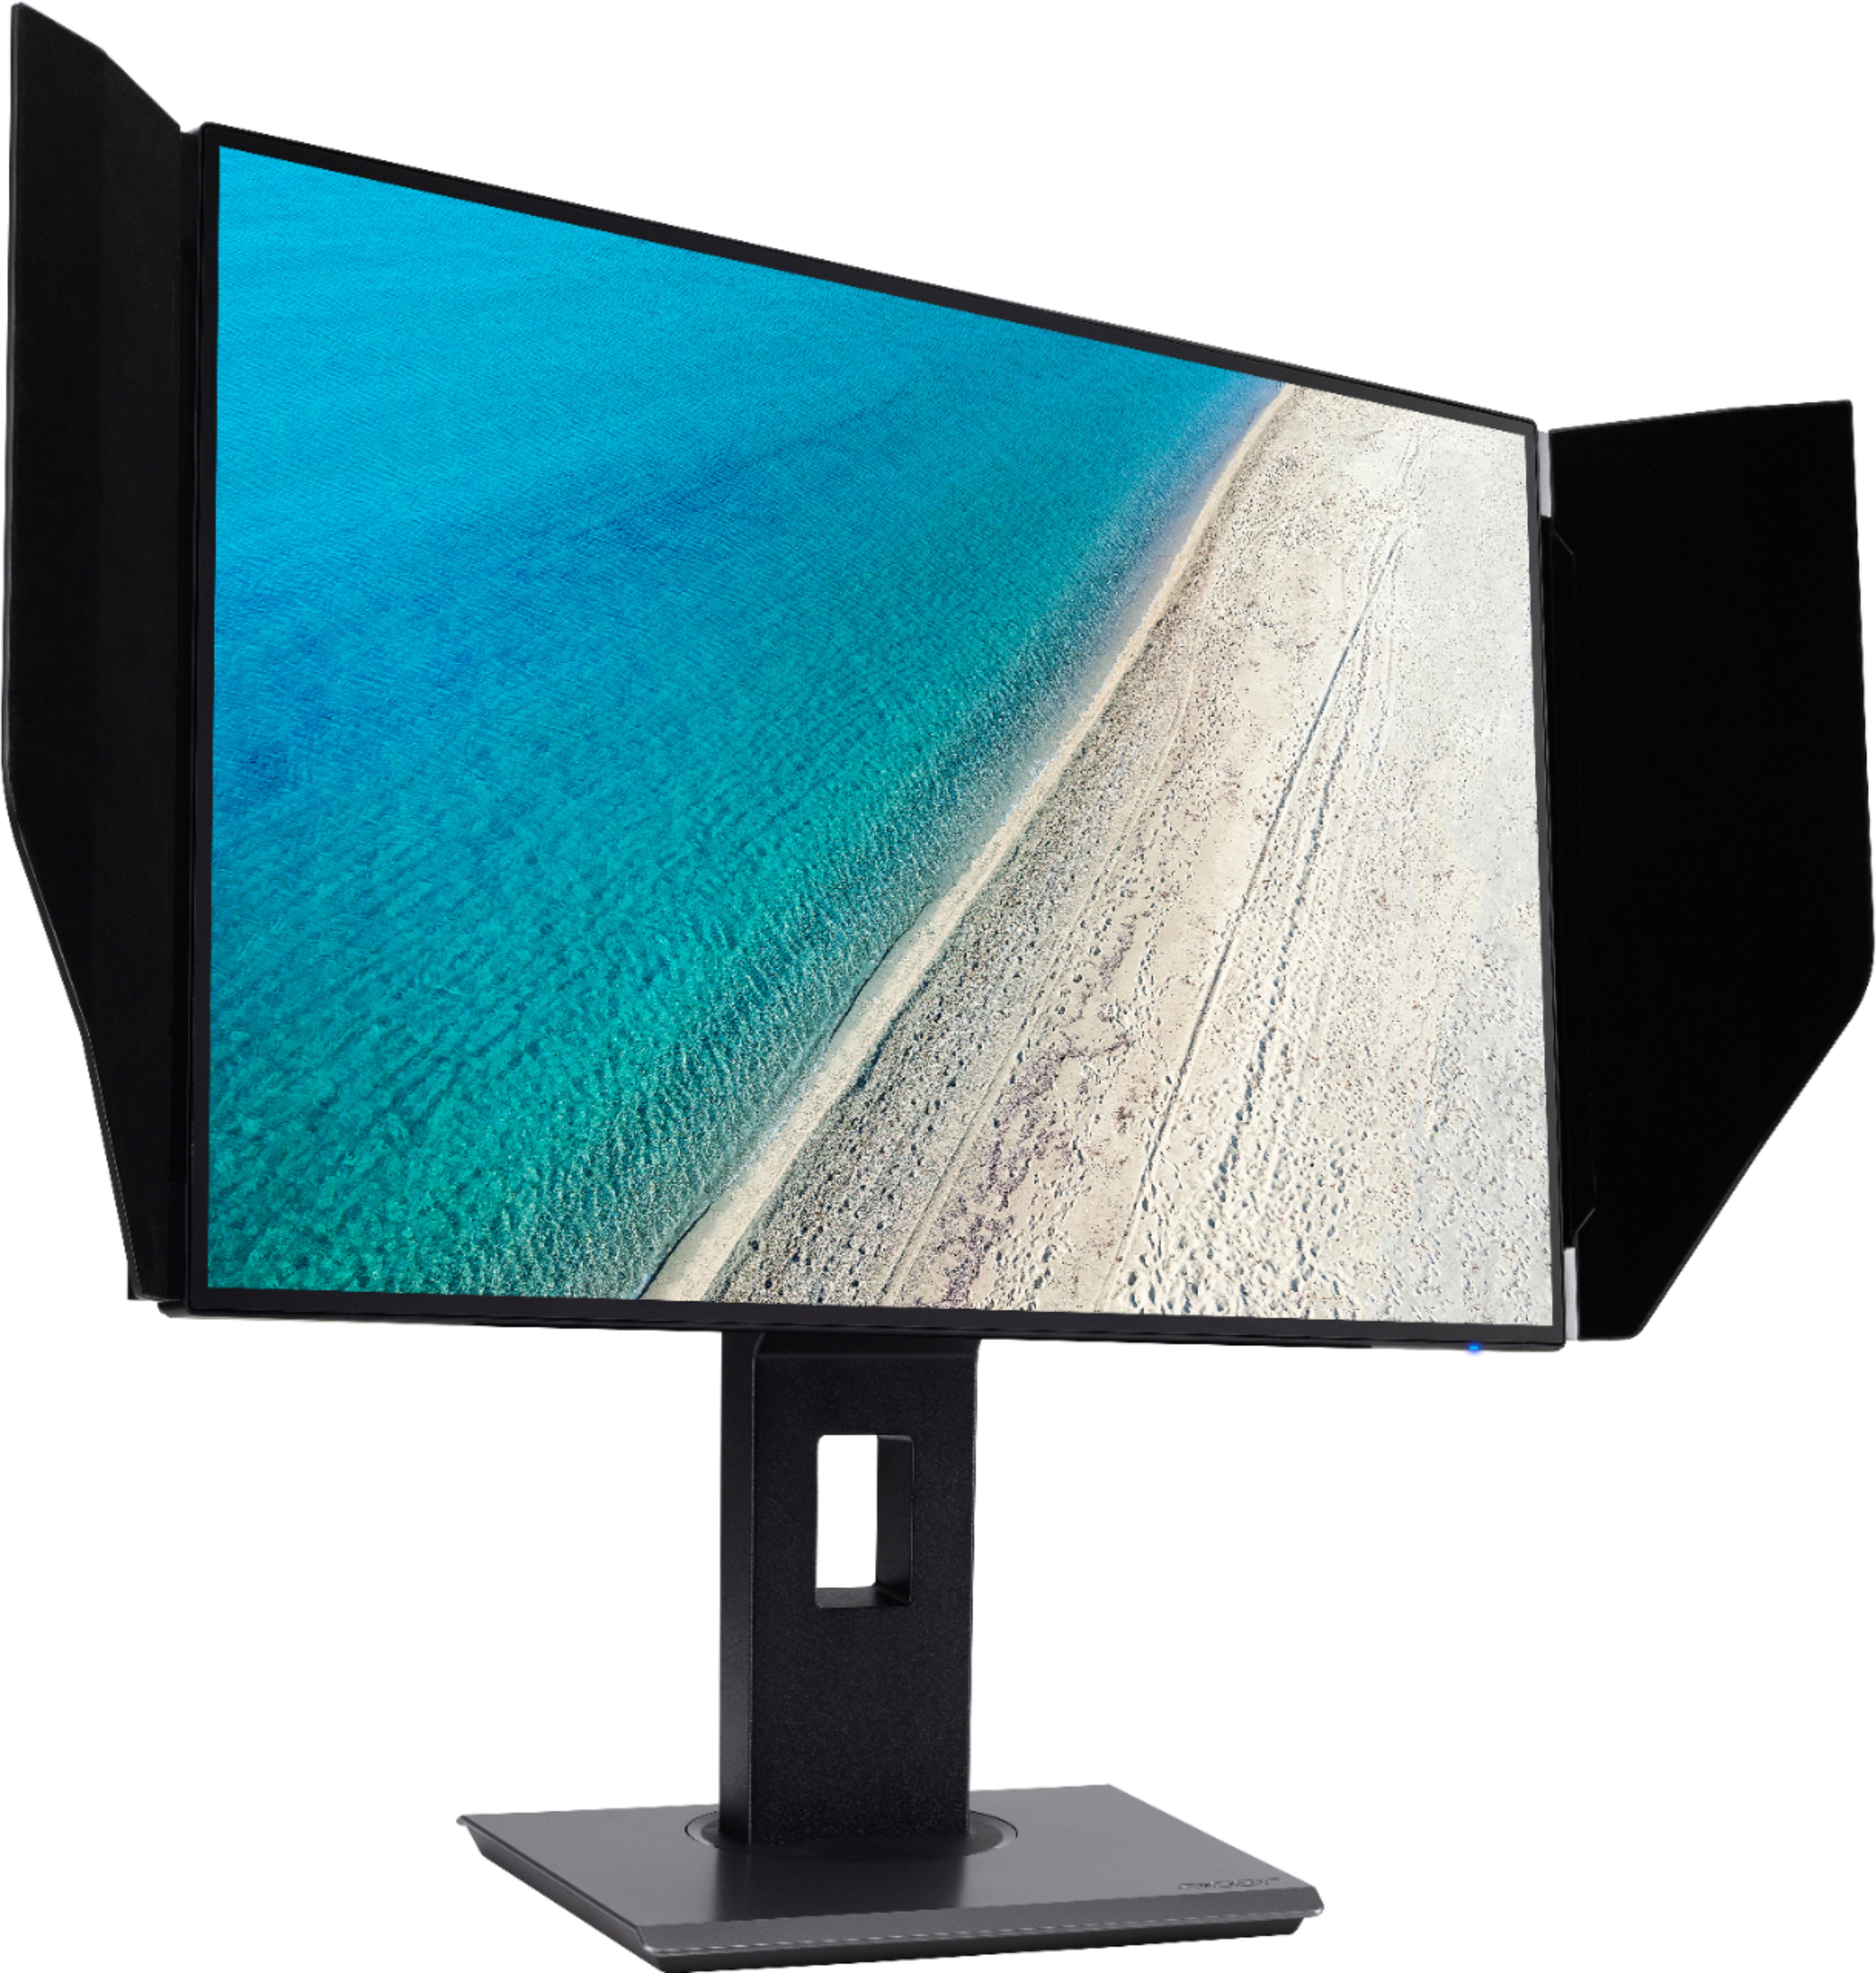 Angle View: Acer - ProDesigner PE270K bmiipruzx 27" Ultra HD IPS Monitor (HDMI) - Black